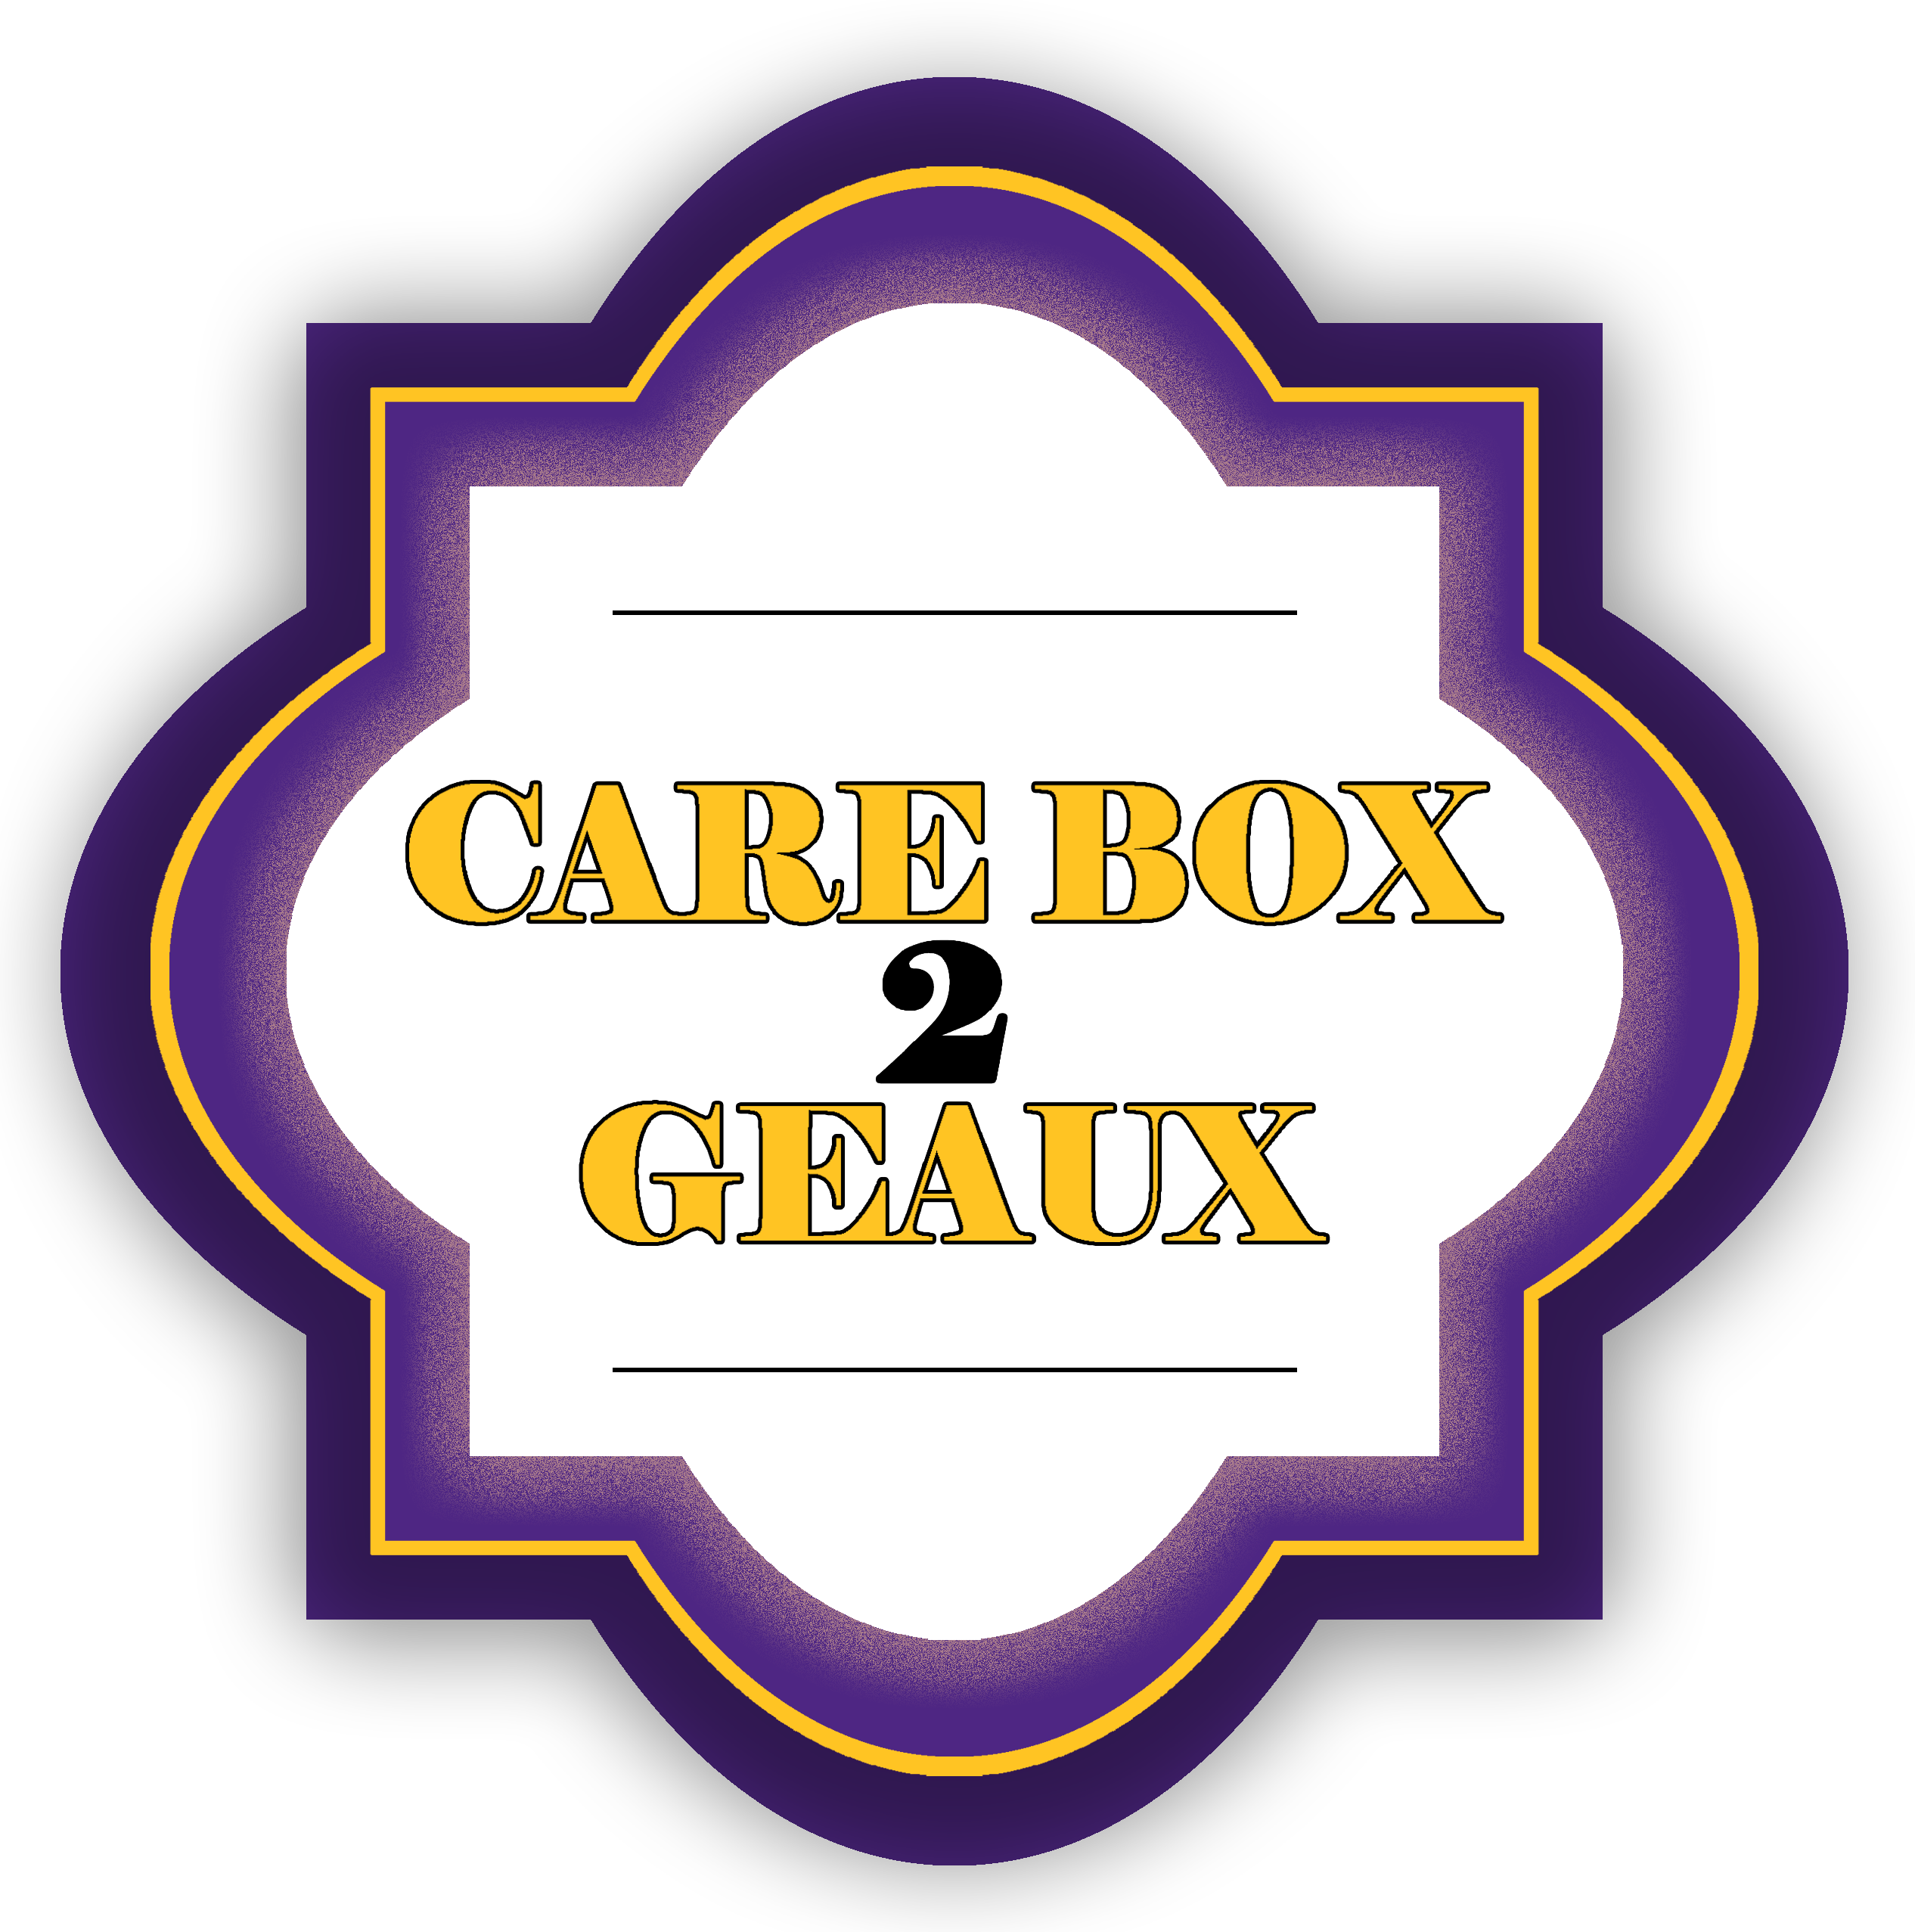 Louisiana Saturday Night Beaded Purse Strap – Care Box 2 Geaux